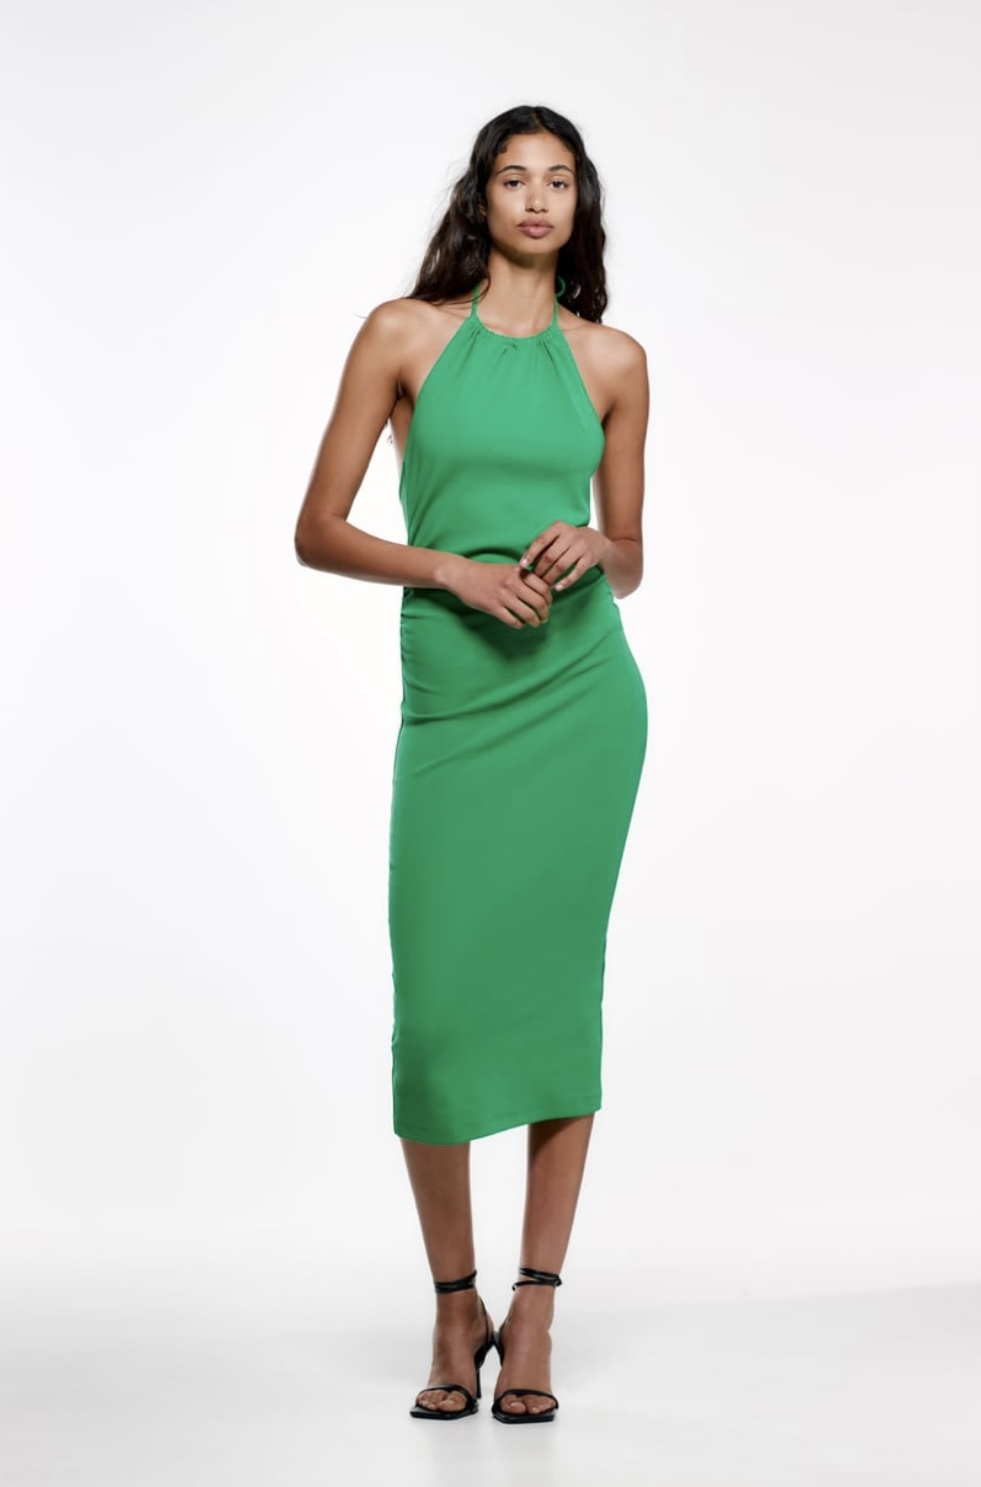 Vestido verde de Zara